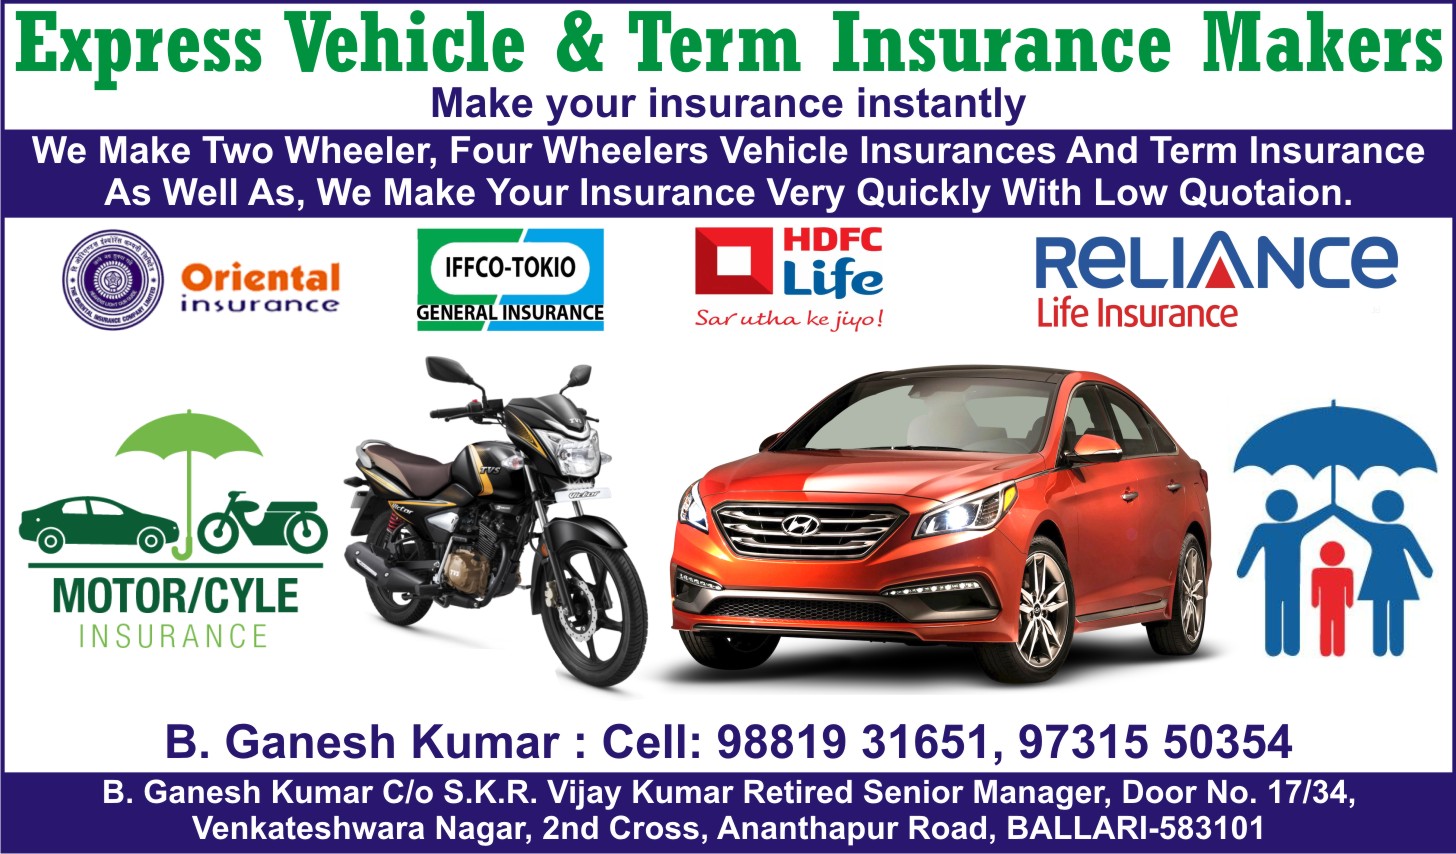 Two Wheeler Four Wheeler Insurance / Motor Insurance In India Types